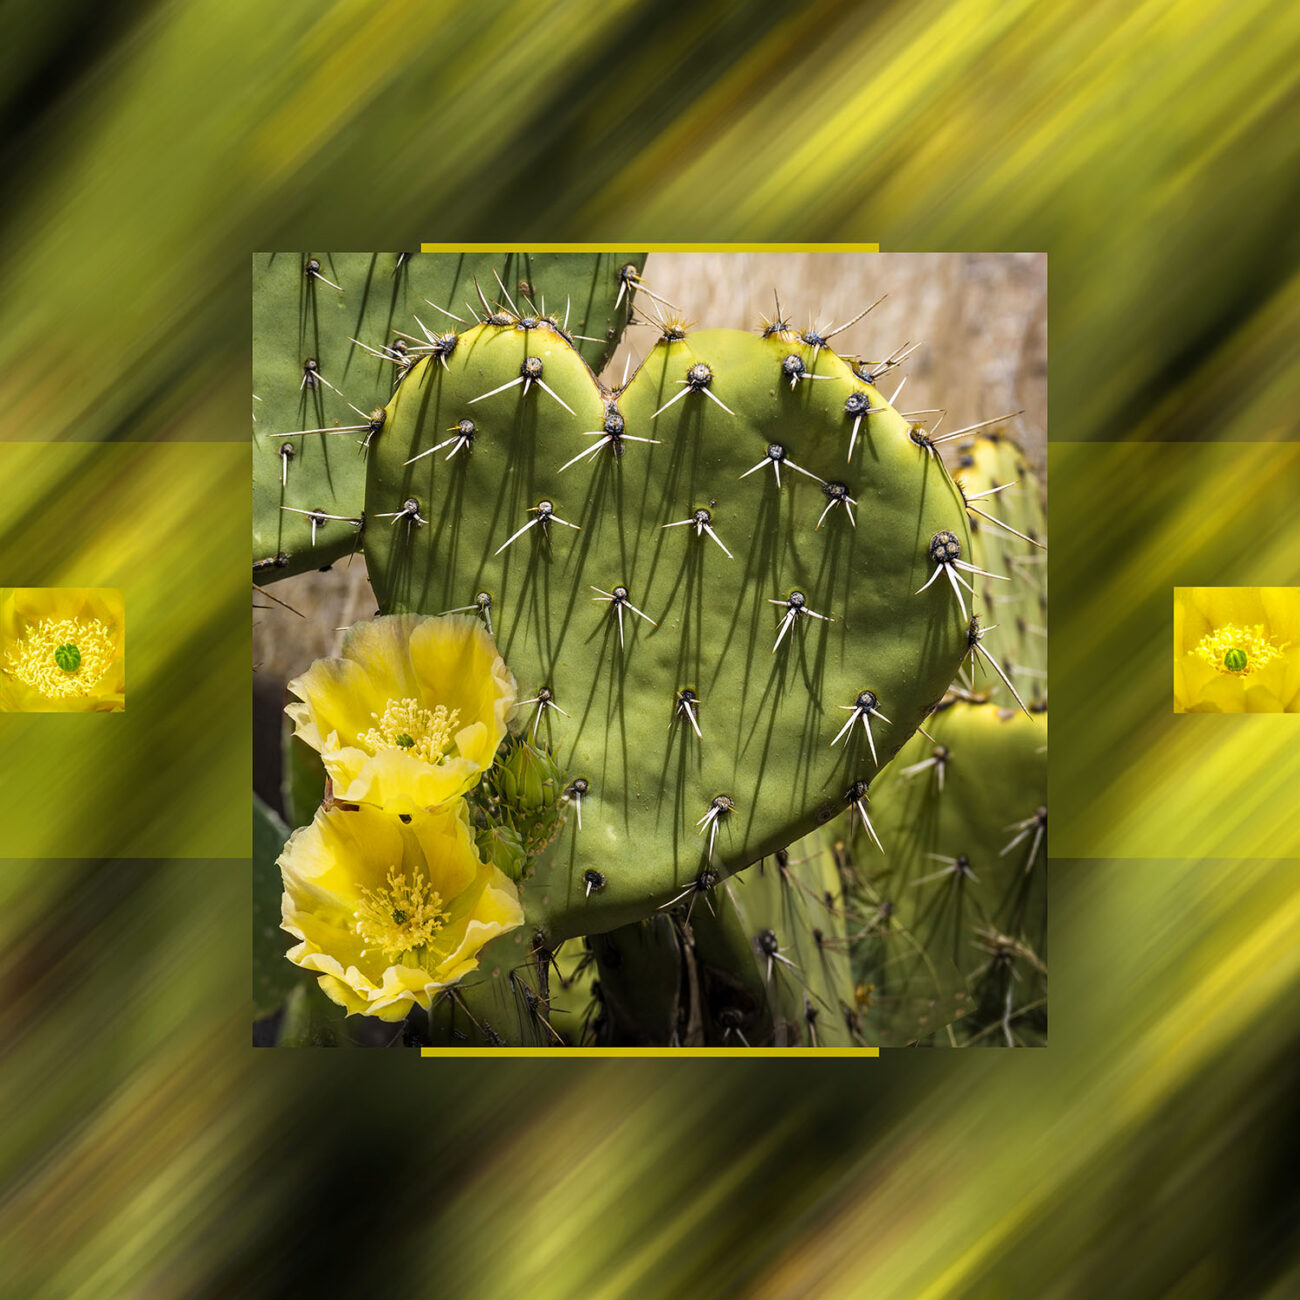 Cactus flower heart